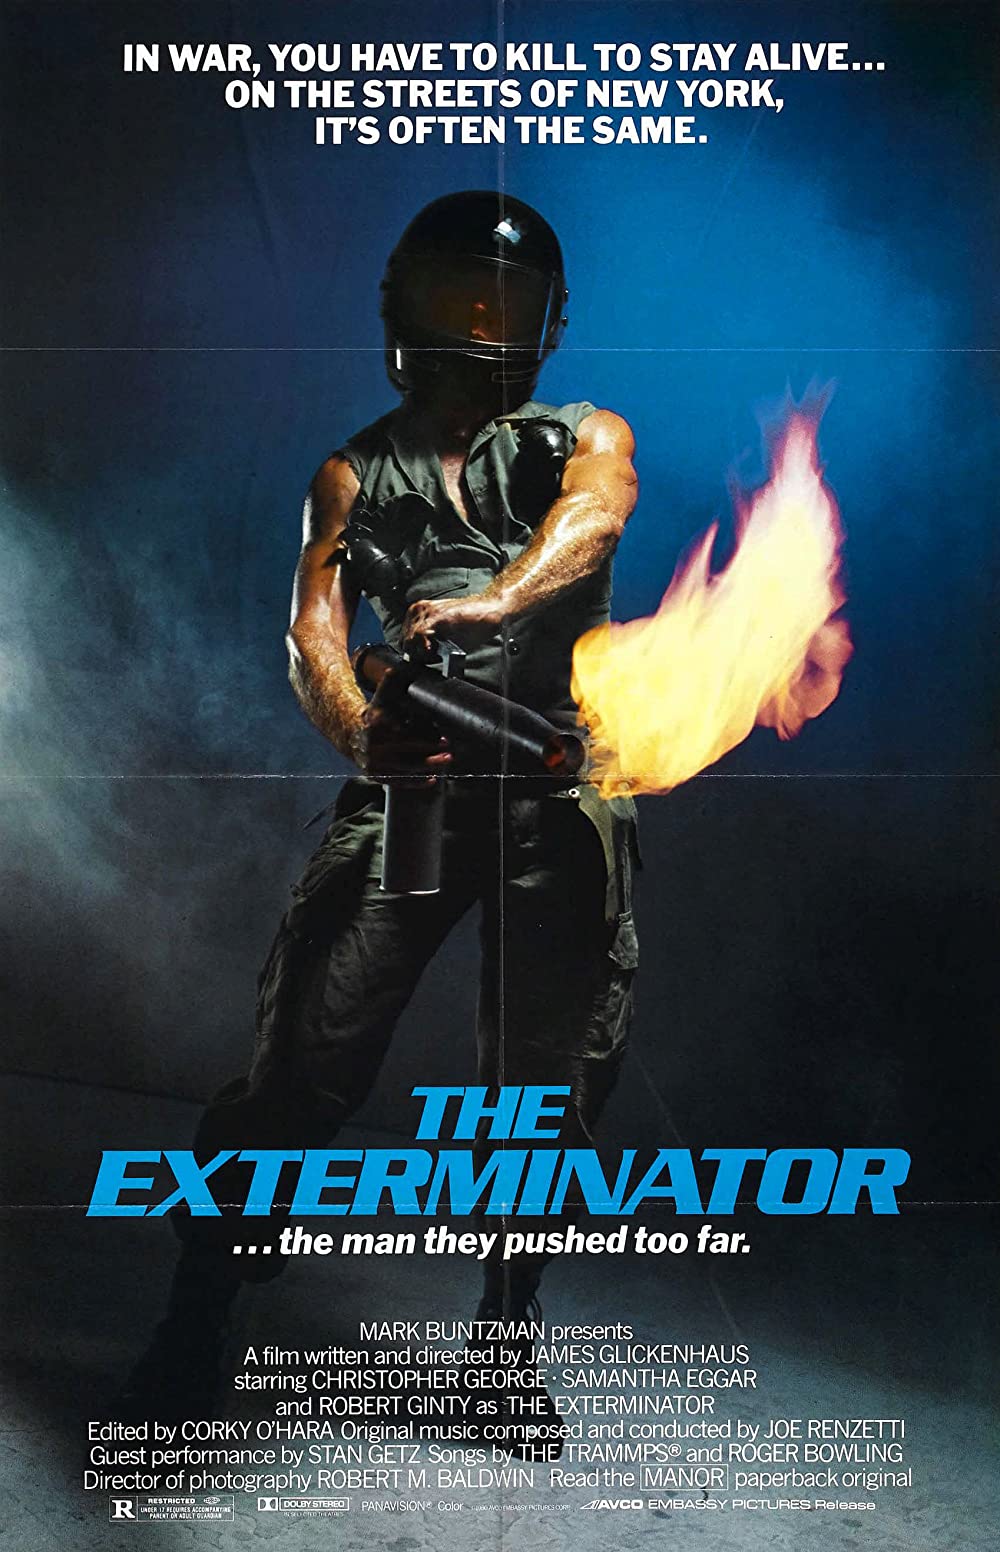 Filmbeschreibung zu The Exterminator